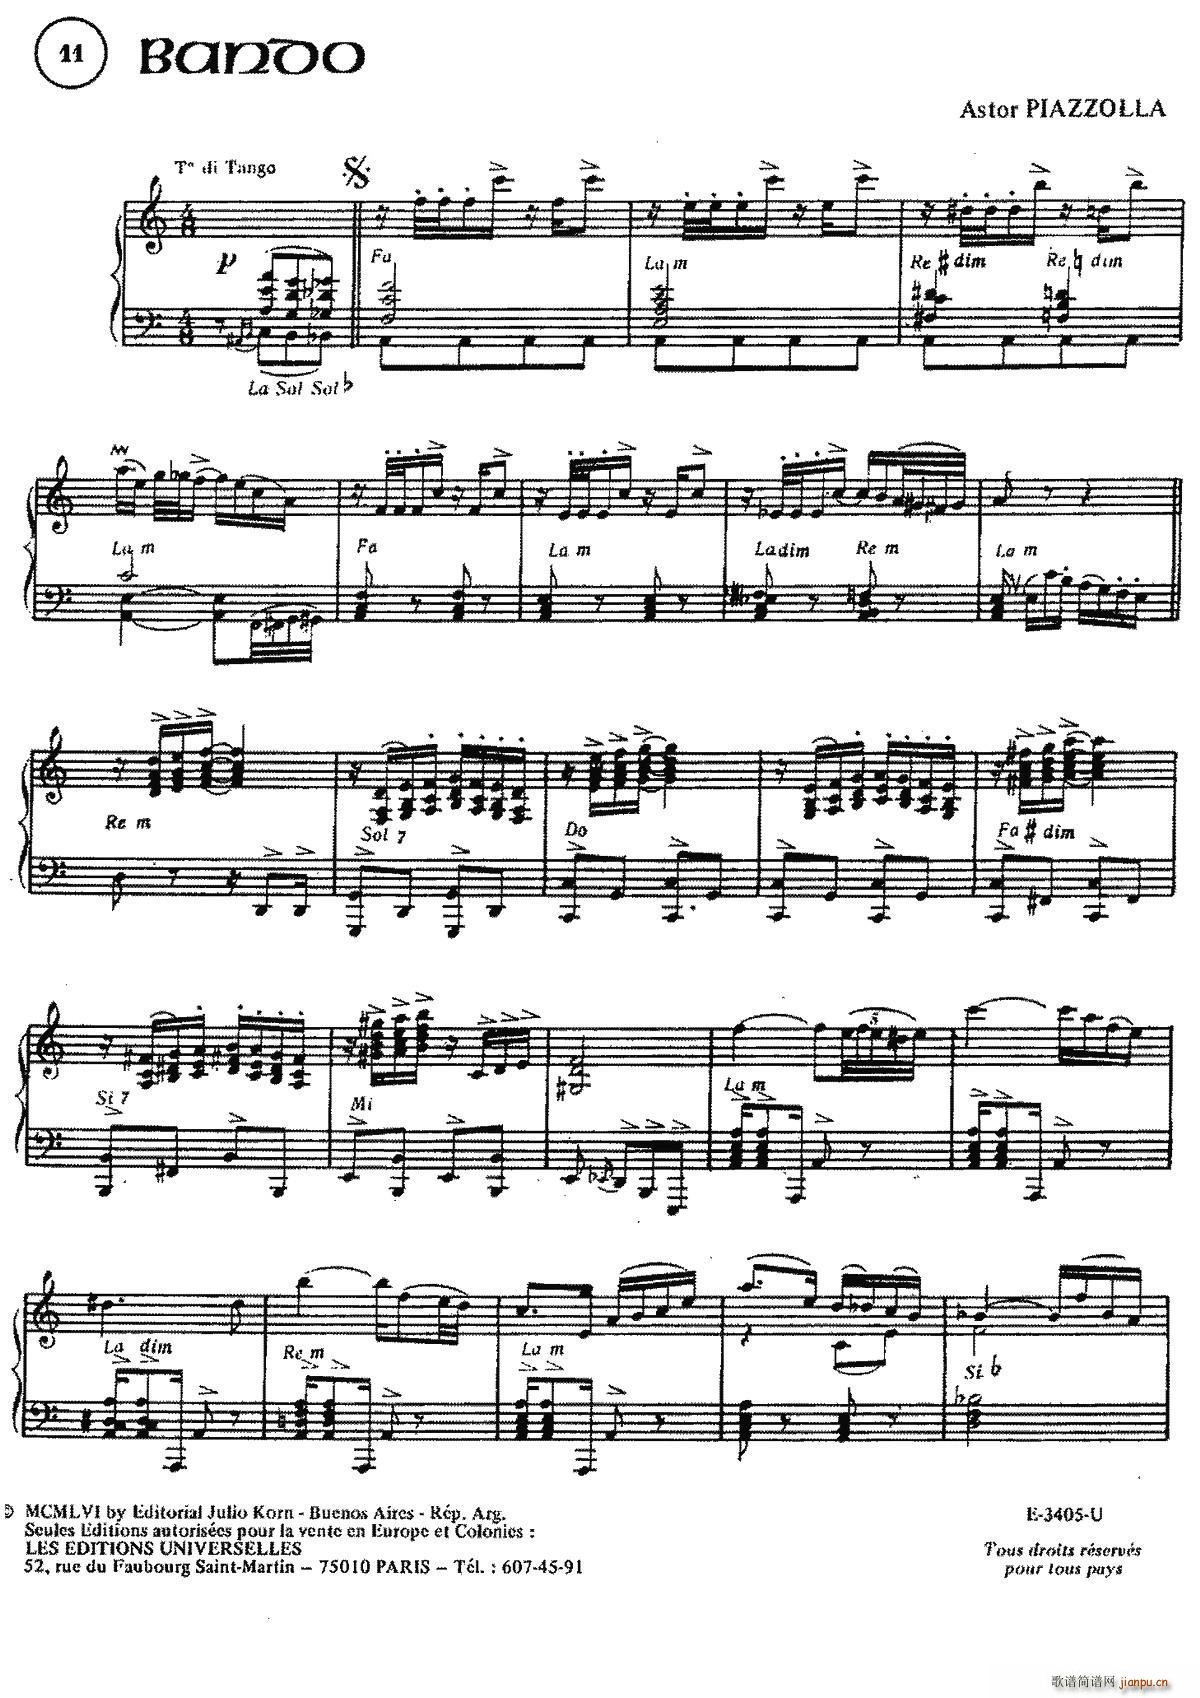 Piazzolla合集 11 Bando(手风琴谱)1